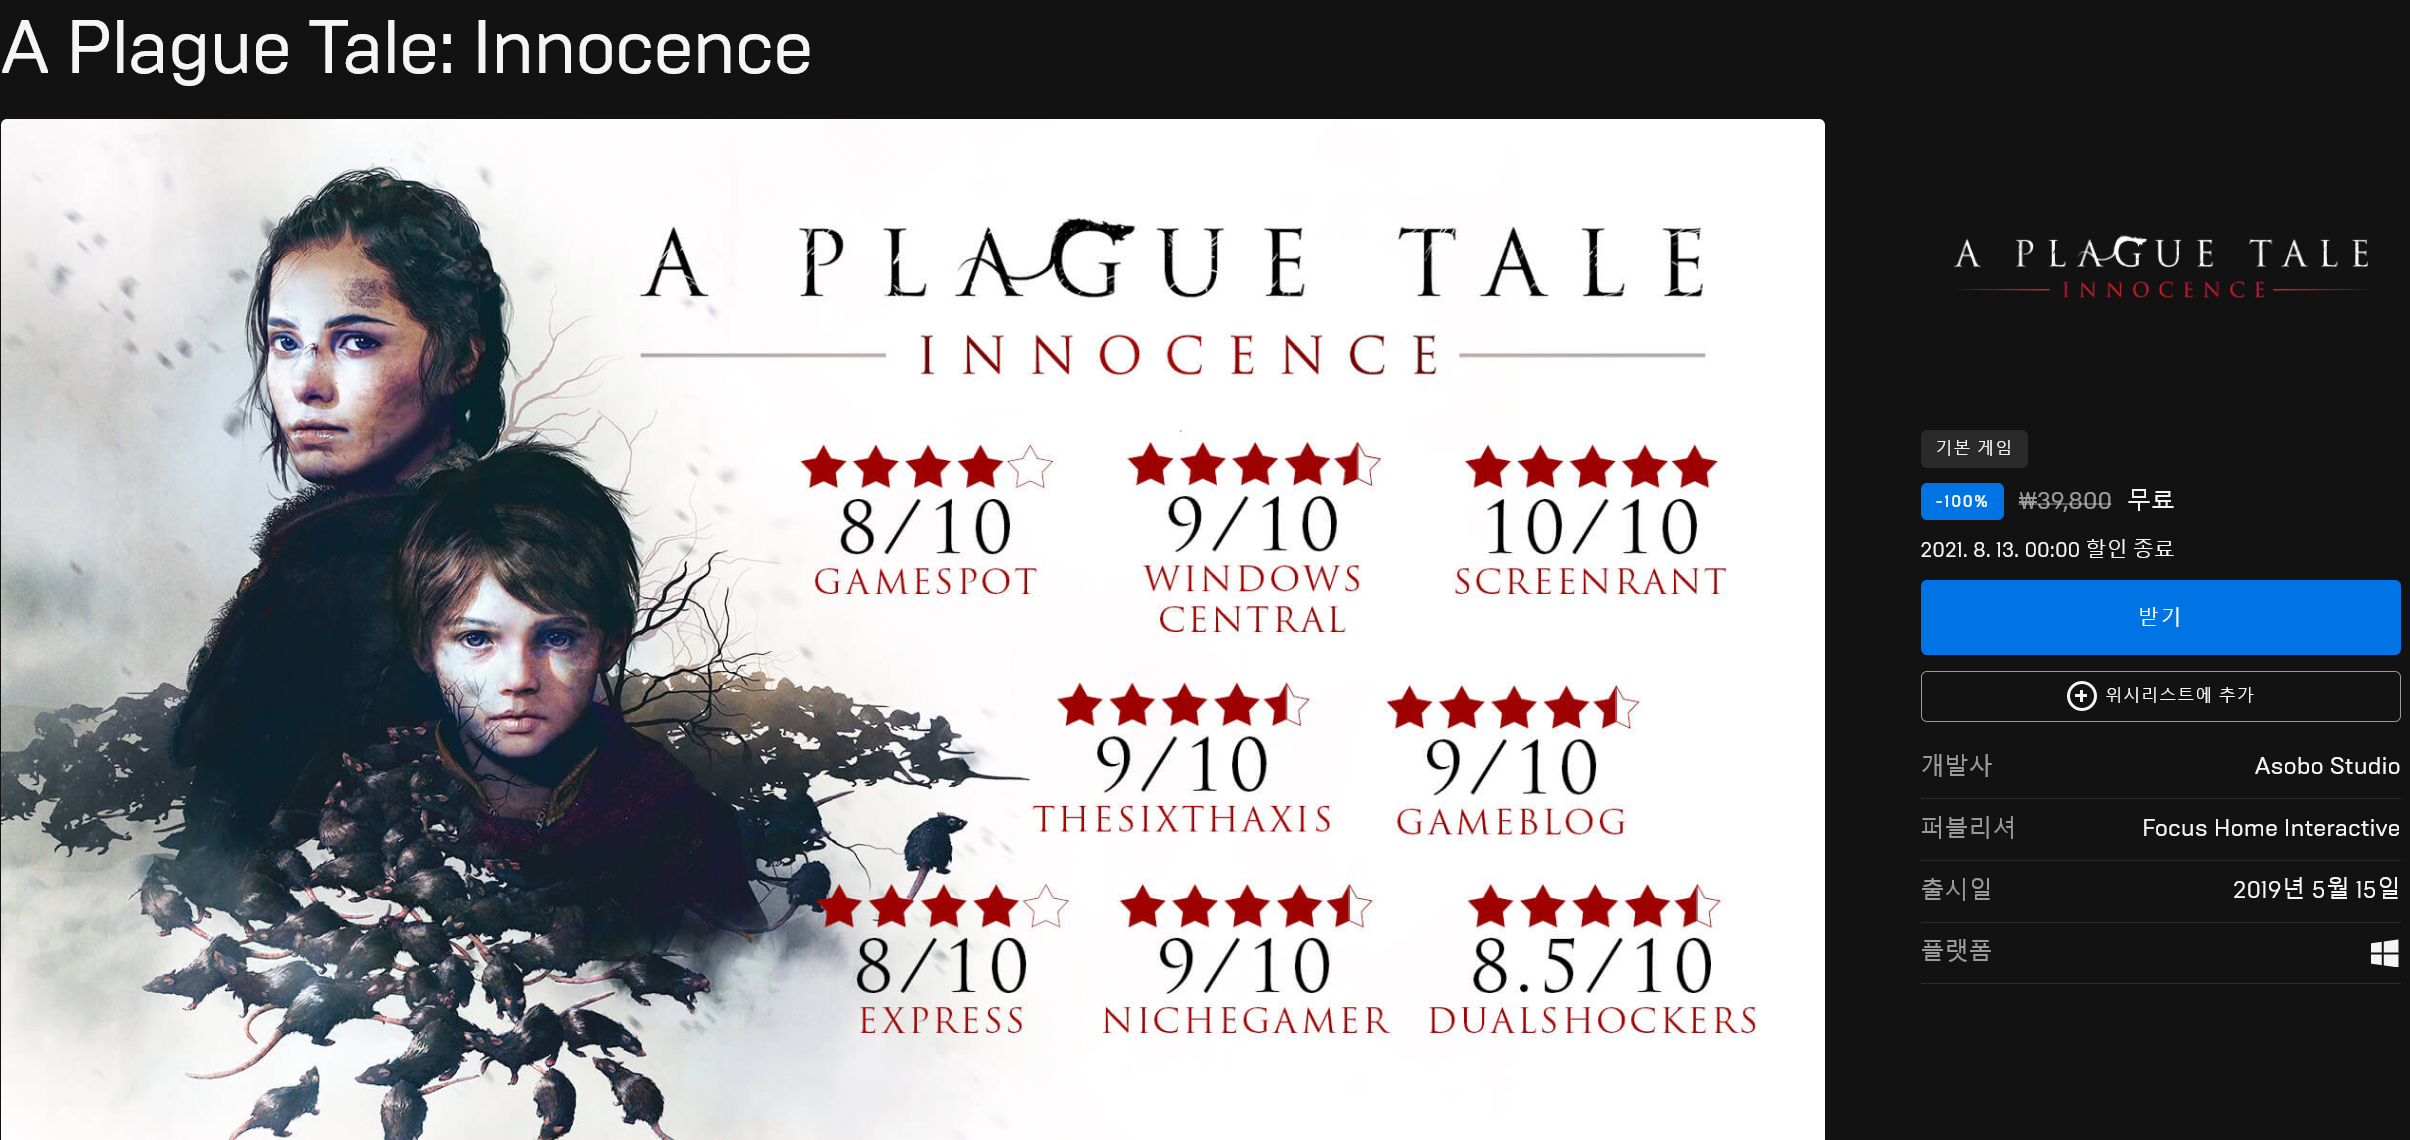 Screenshot 2021-08-06 at 01-06-59 A Plague Tale Innocence 오늘 다운로드 및 구매 - Epic Games Store.png